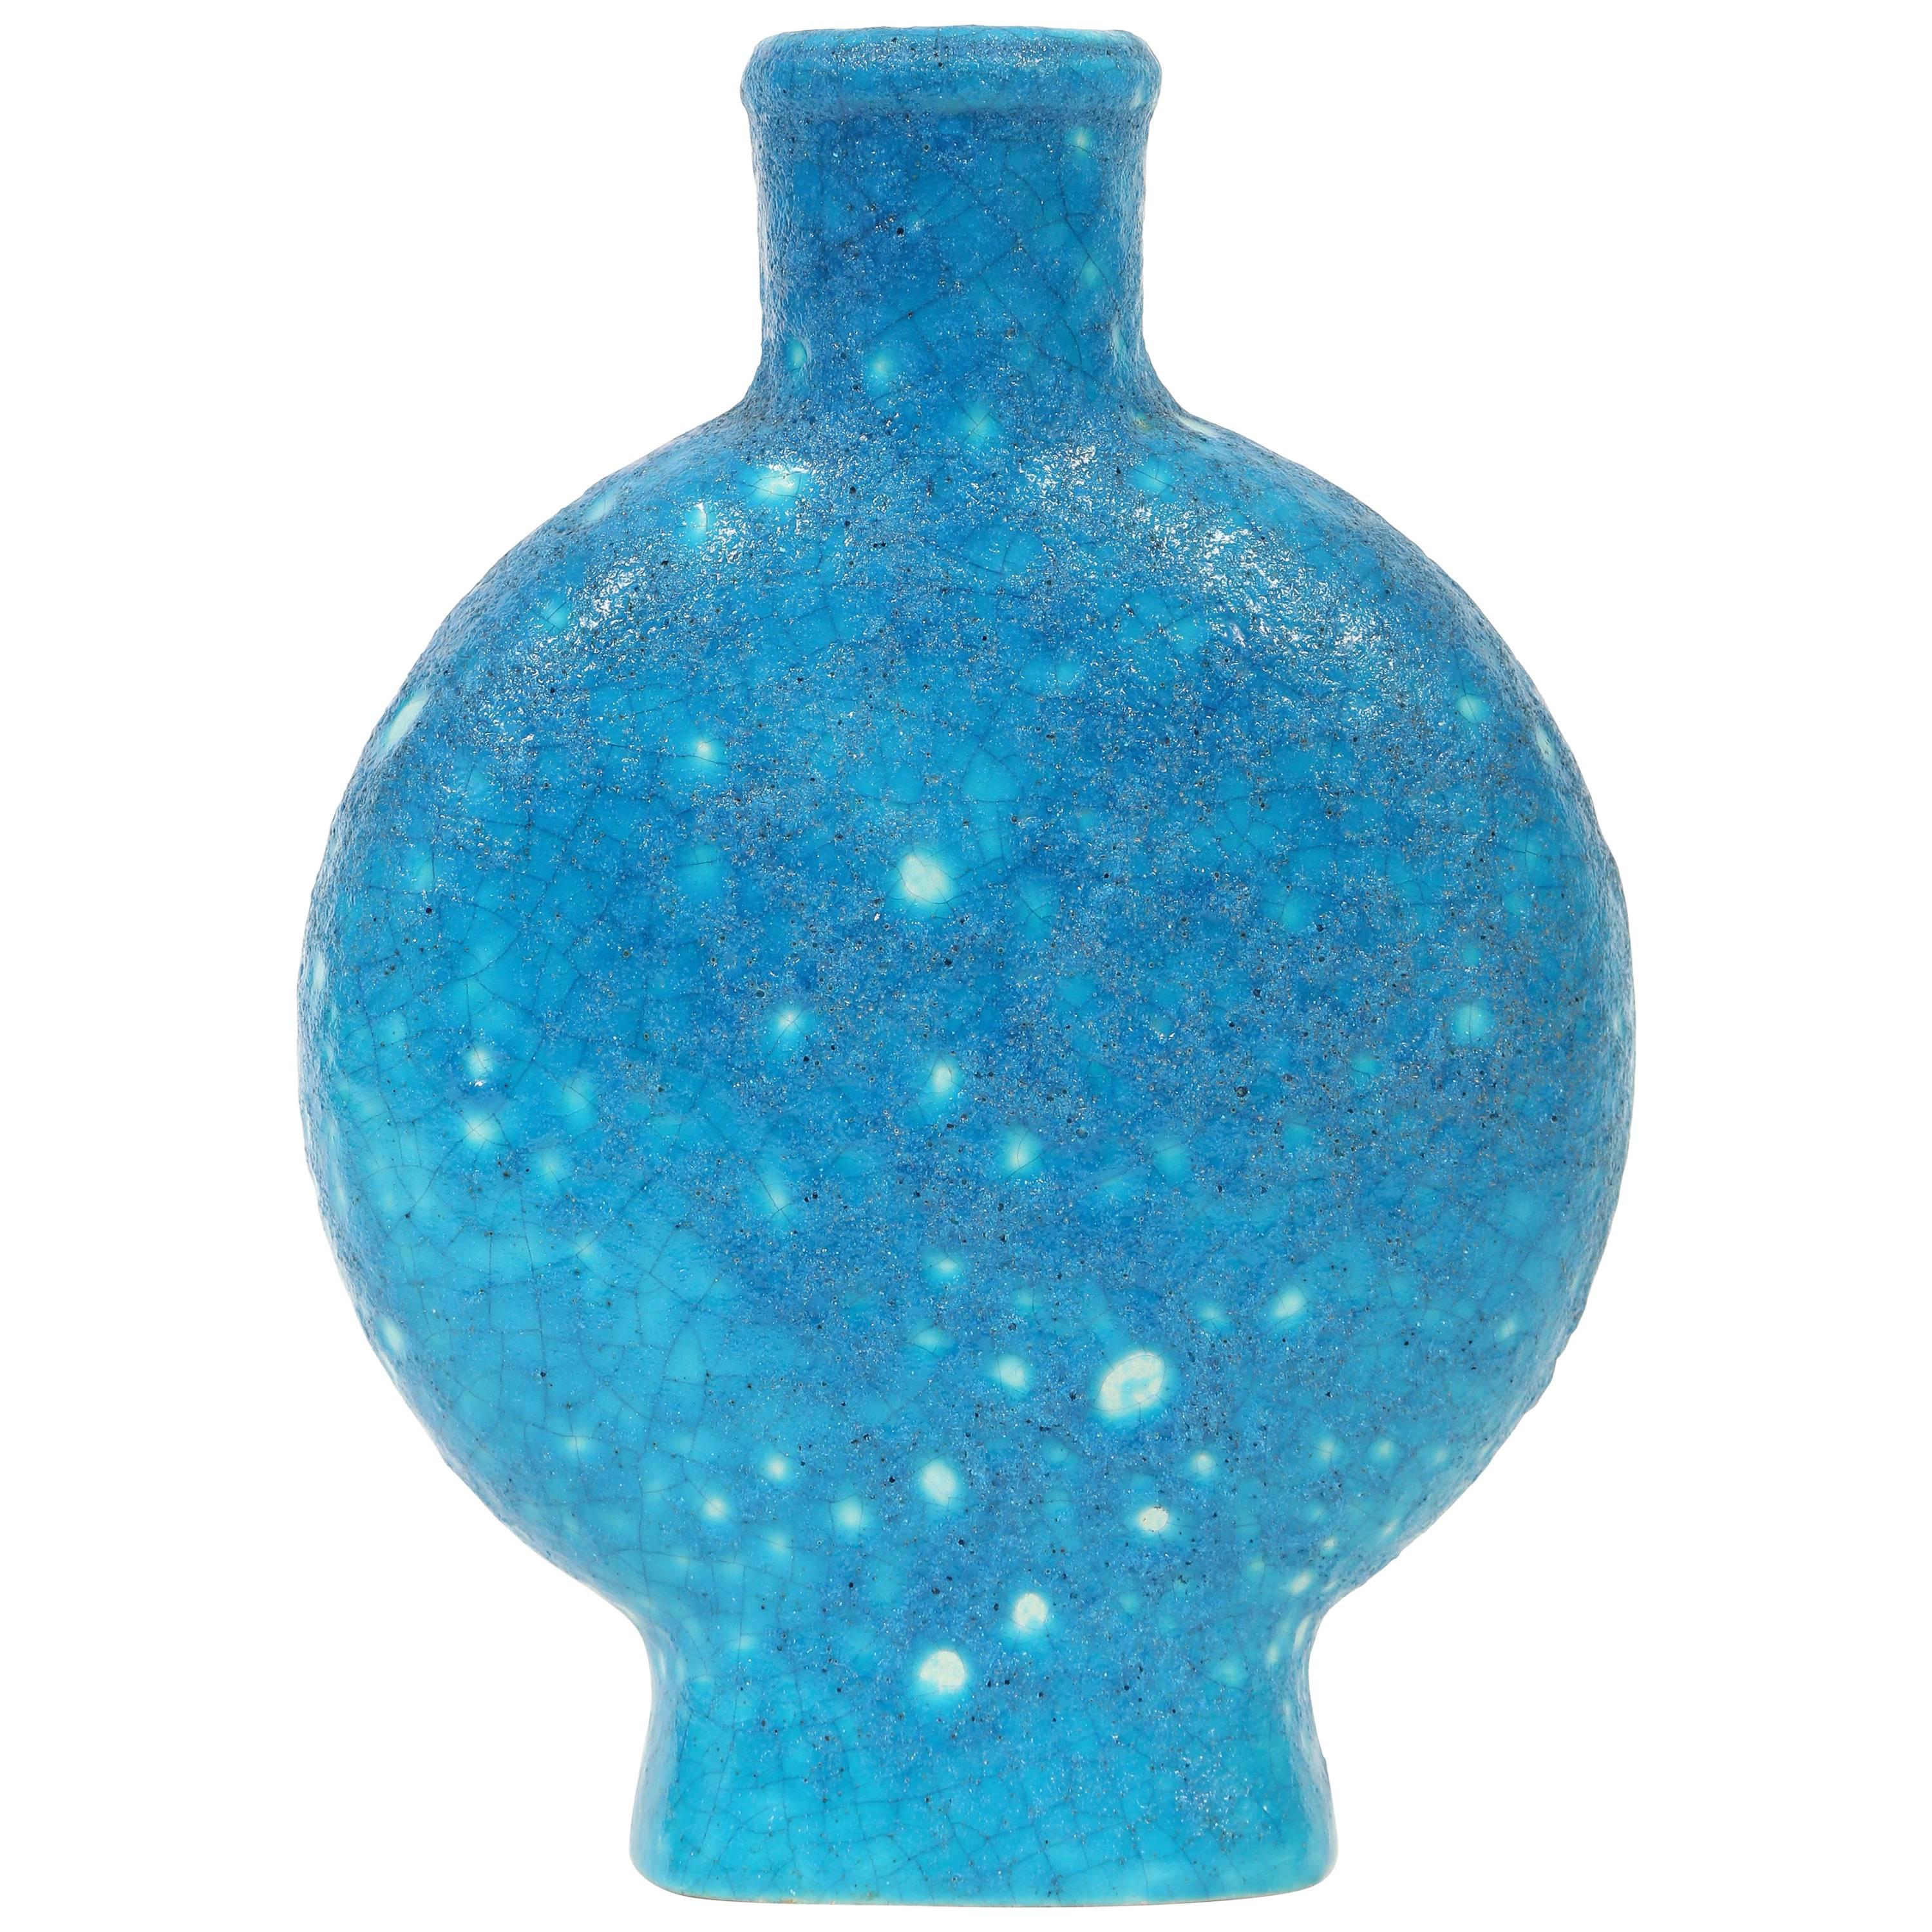 Turquoise Blue Vase by Edmond Lachenal, France, circa 1930